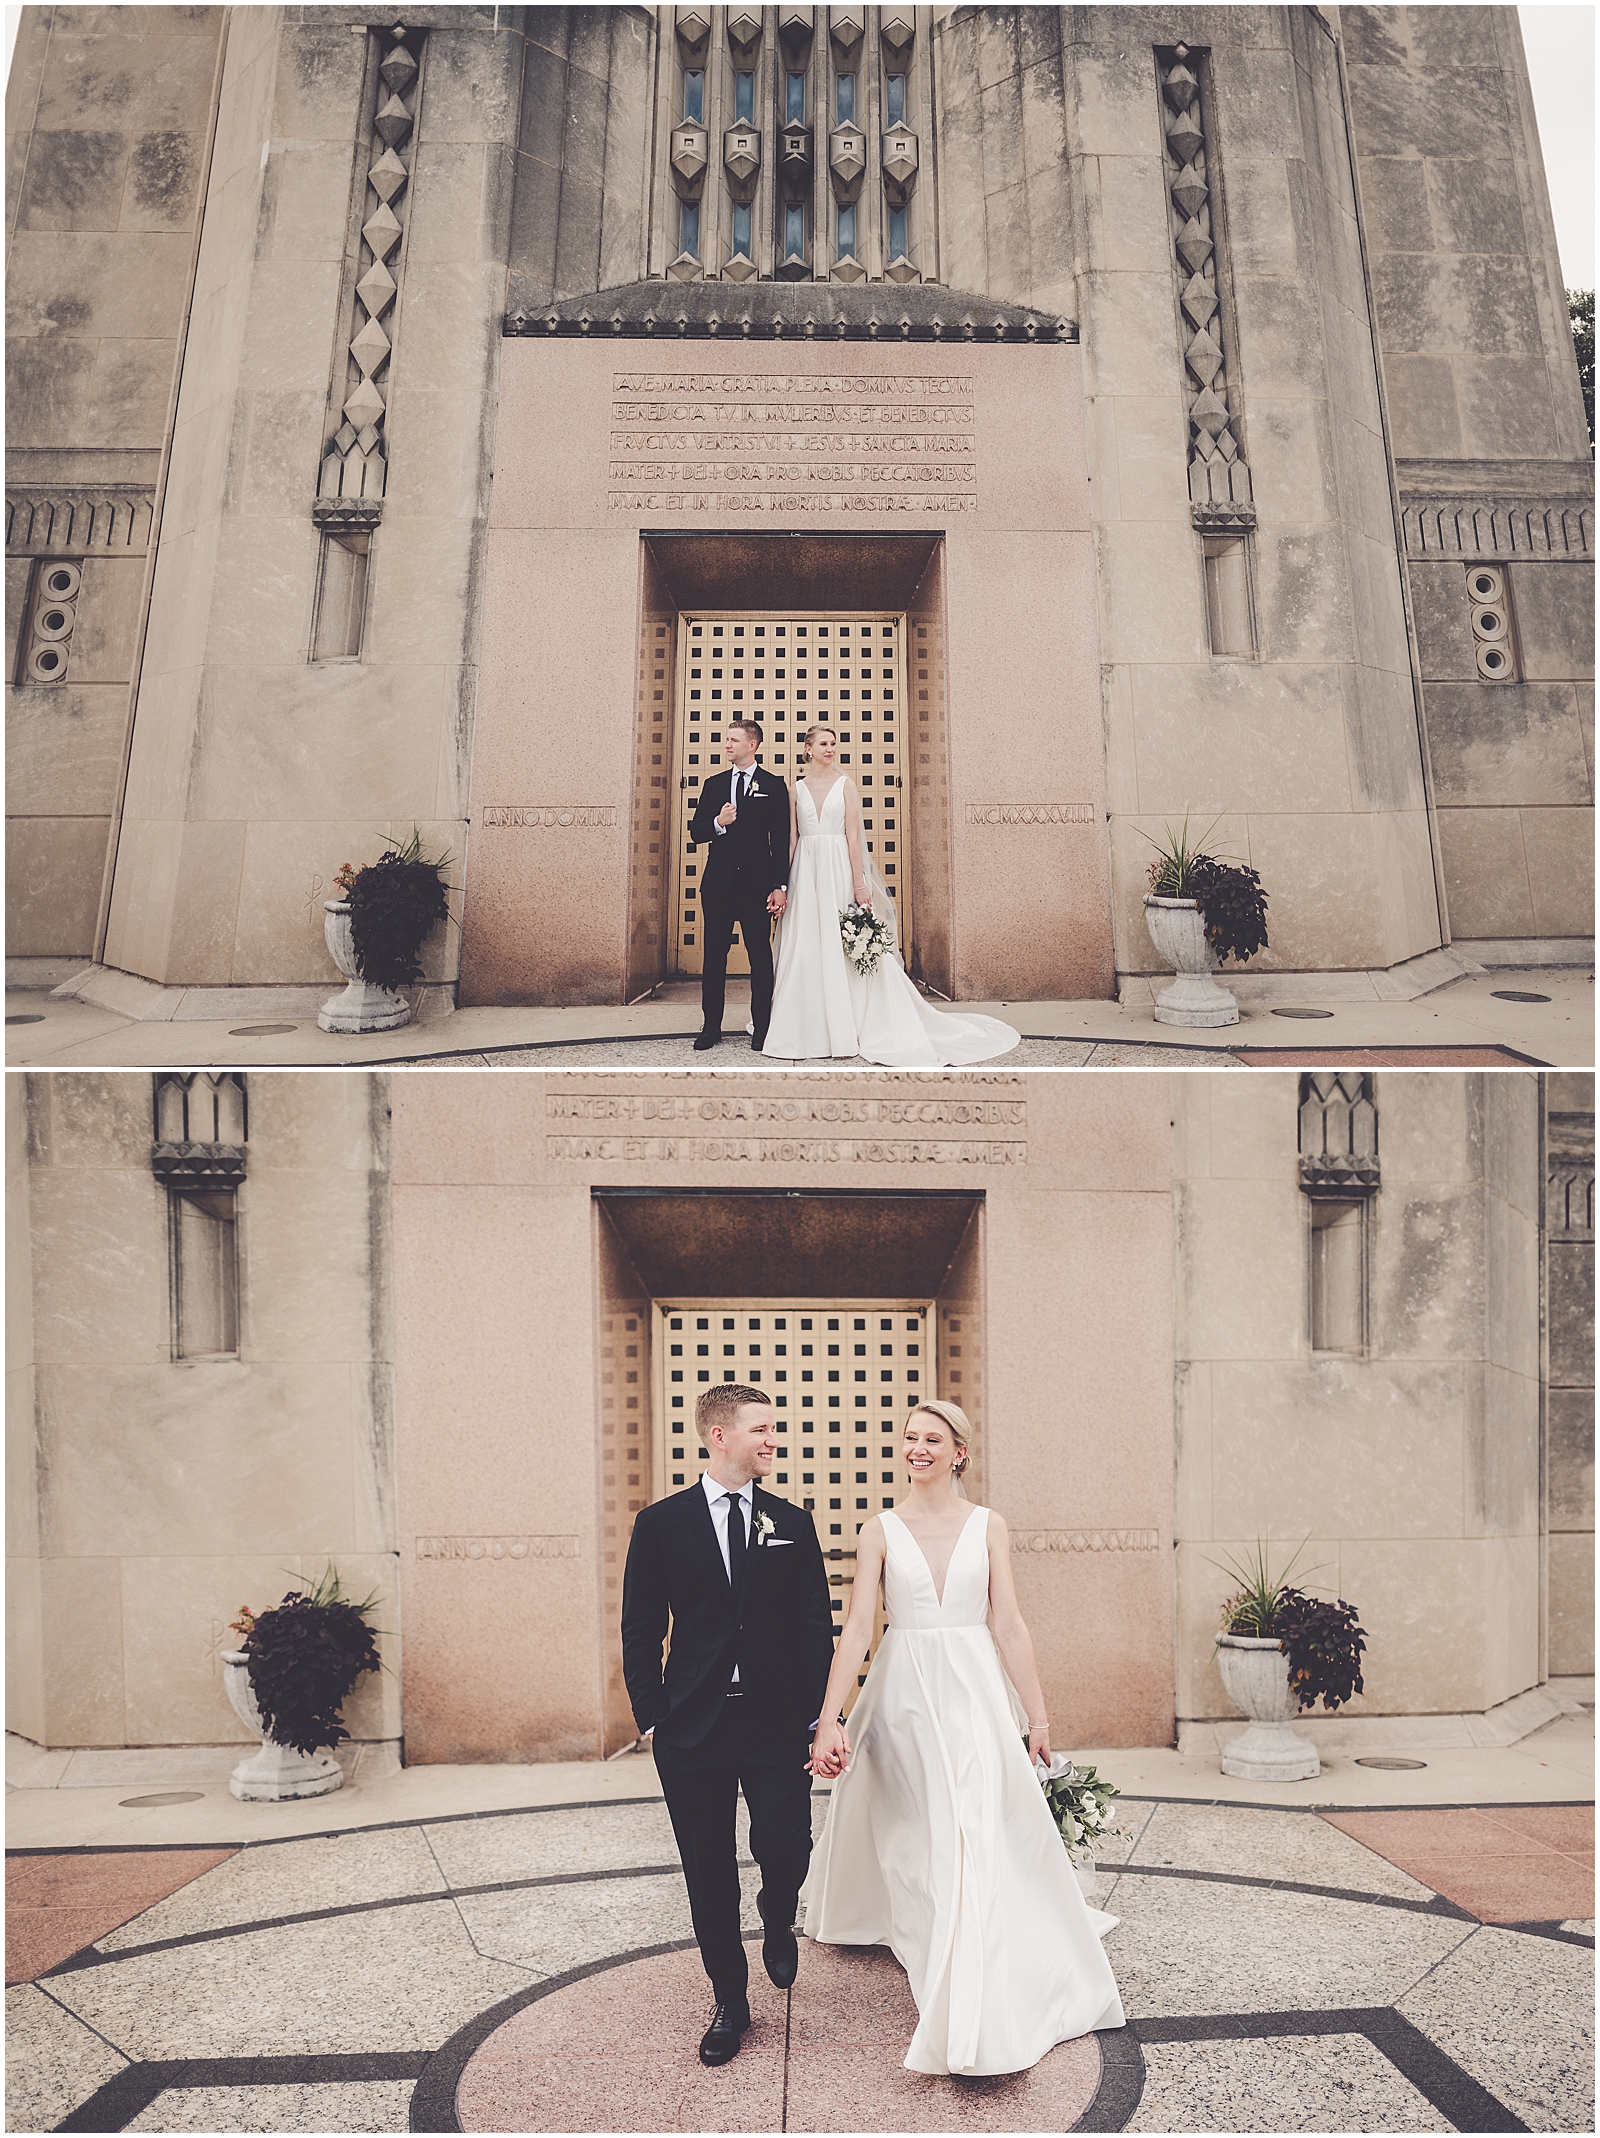 Jill and Ryan's elegant Loyola University & Chicago History Museum wedding day with Chicagoland wedding photographer Kara Evans Photographer.